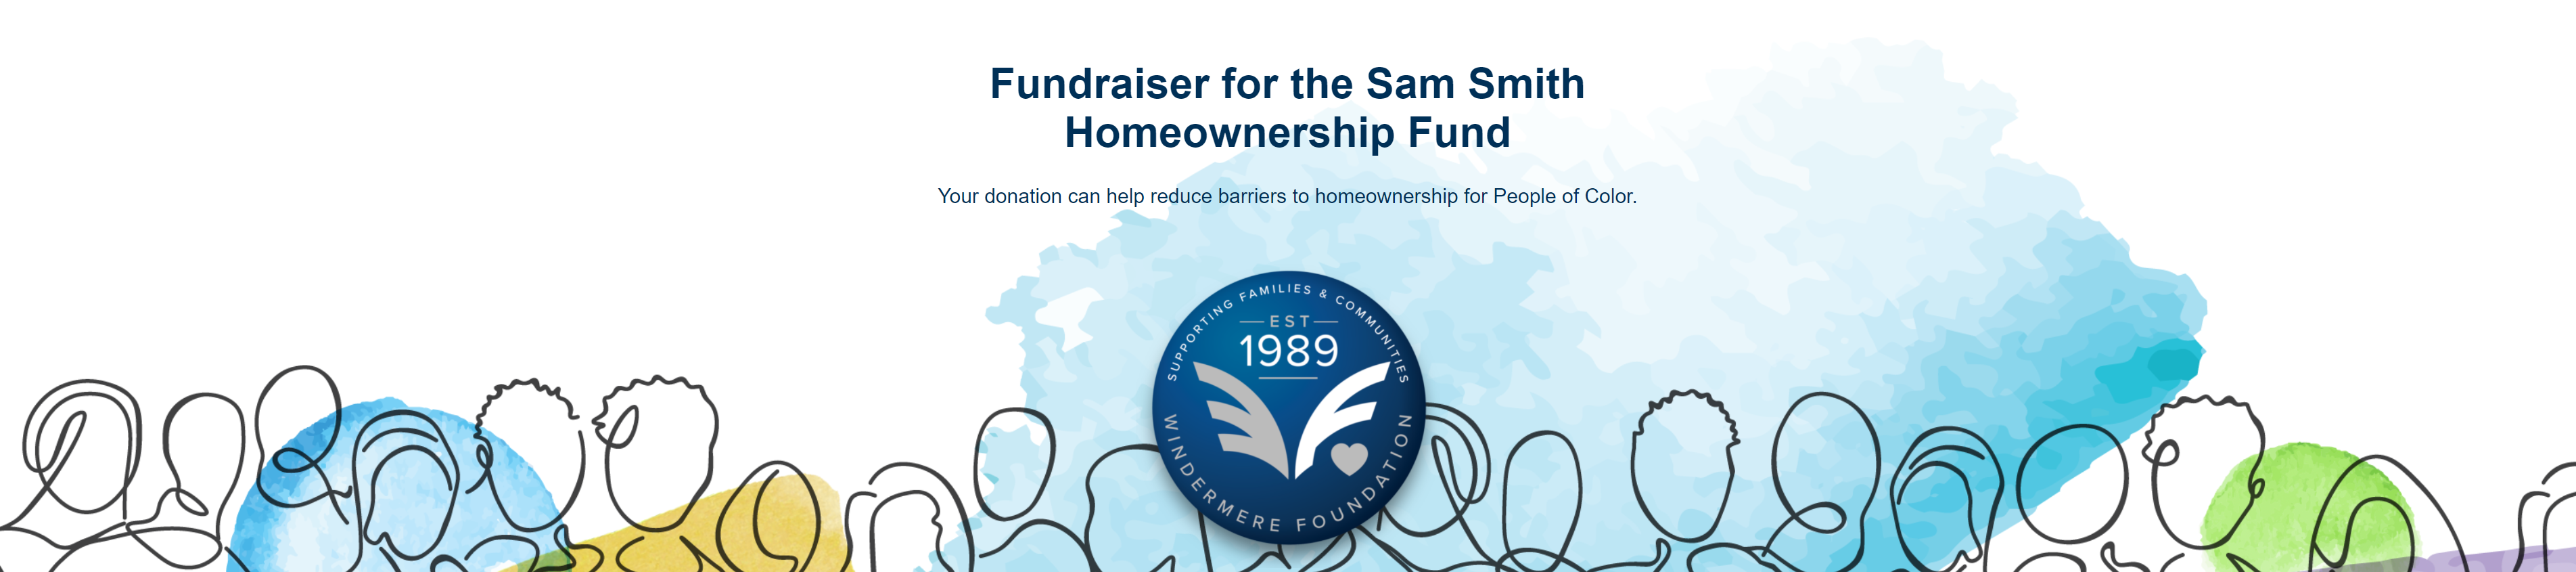 Fundraiser for Sam Smith Homeownership Fund